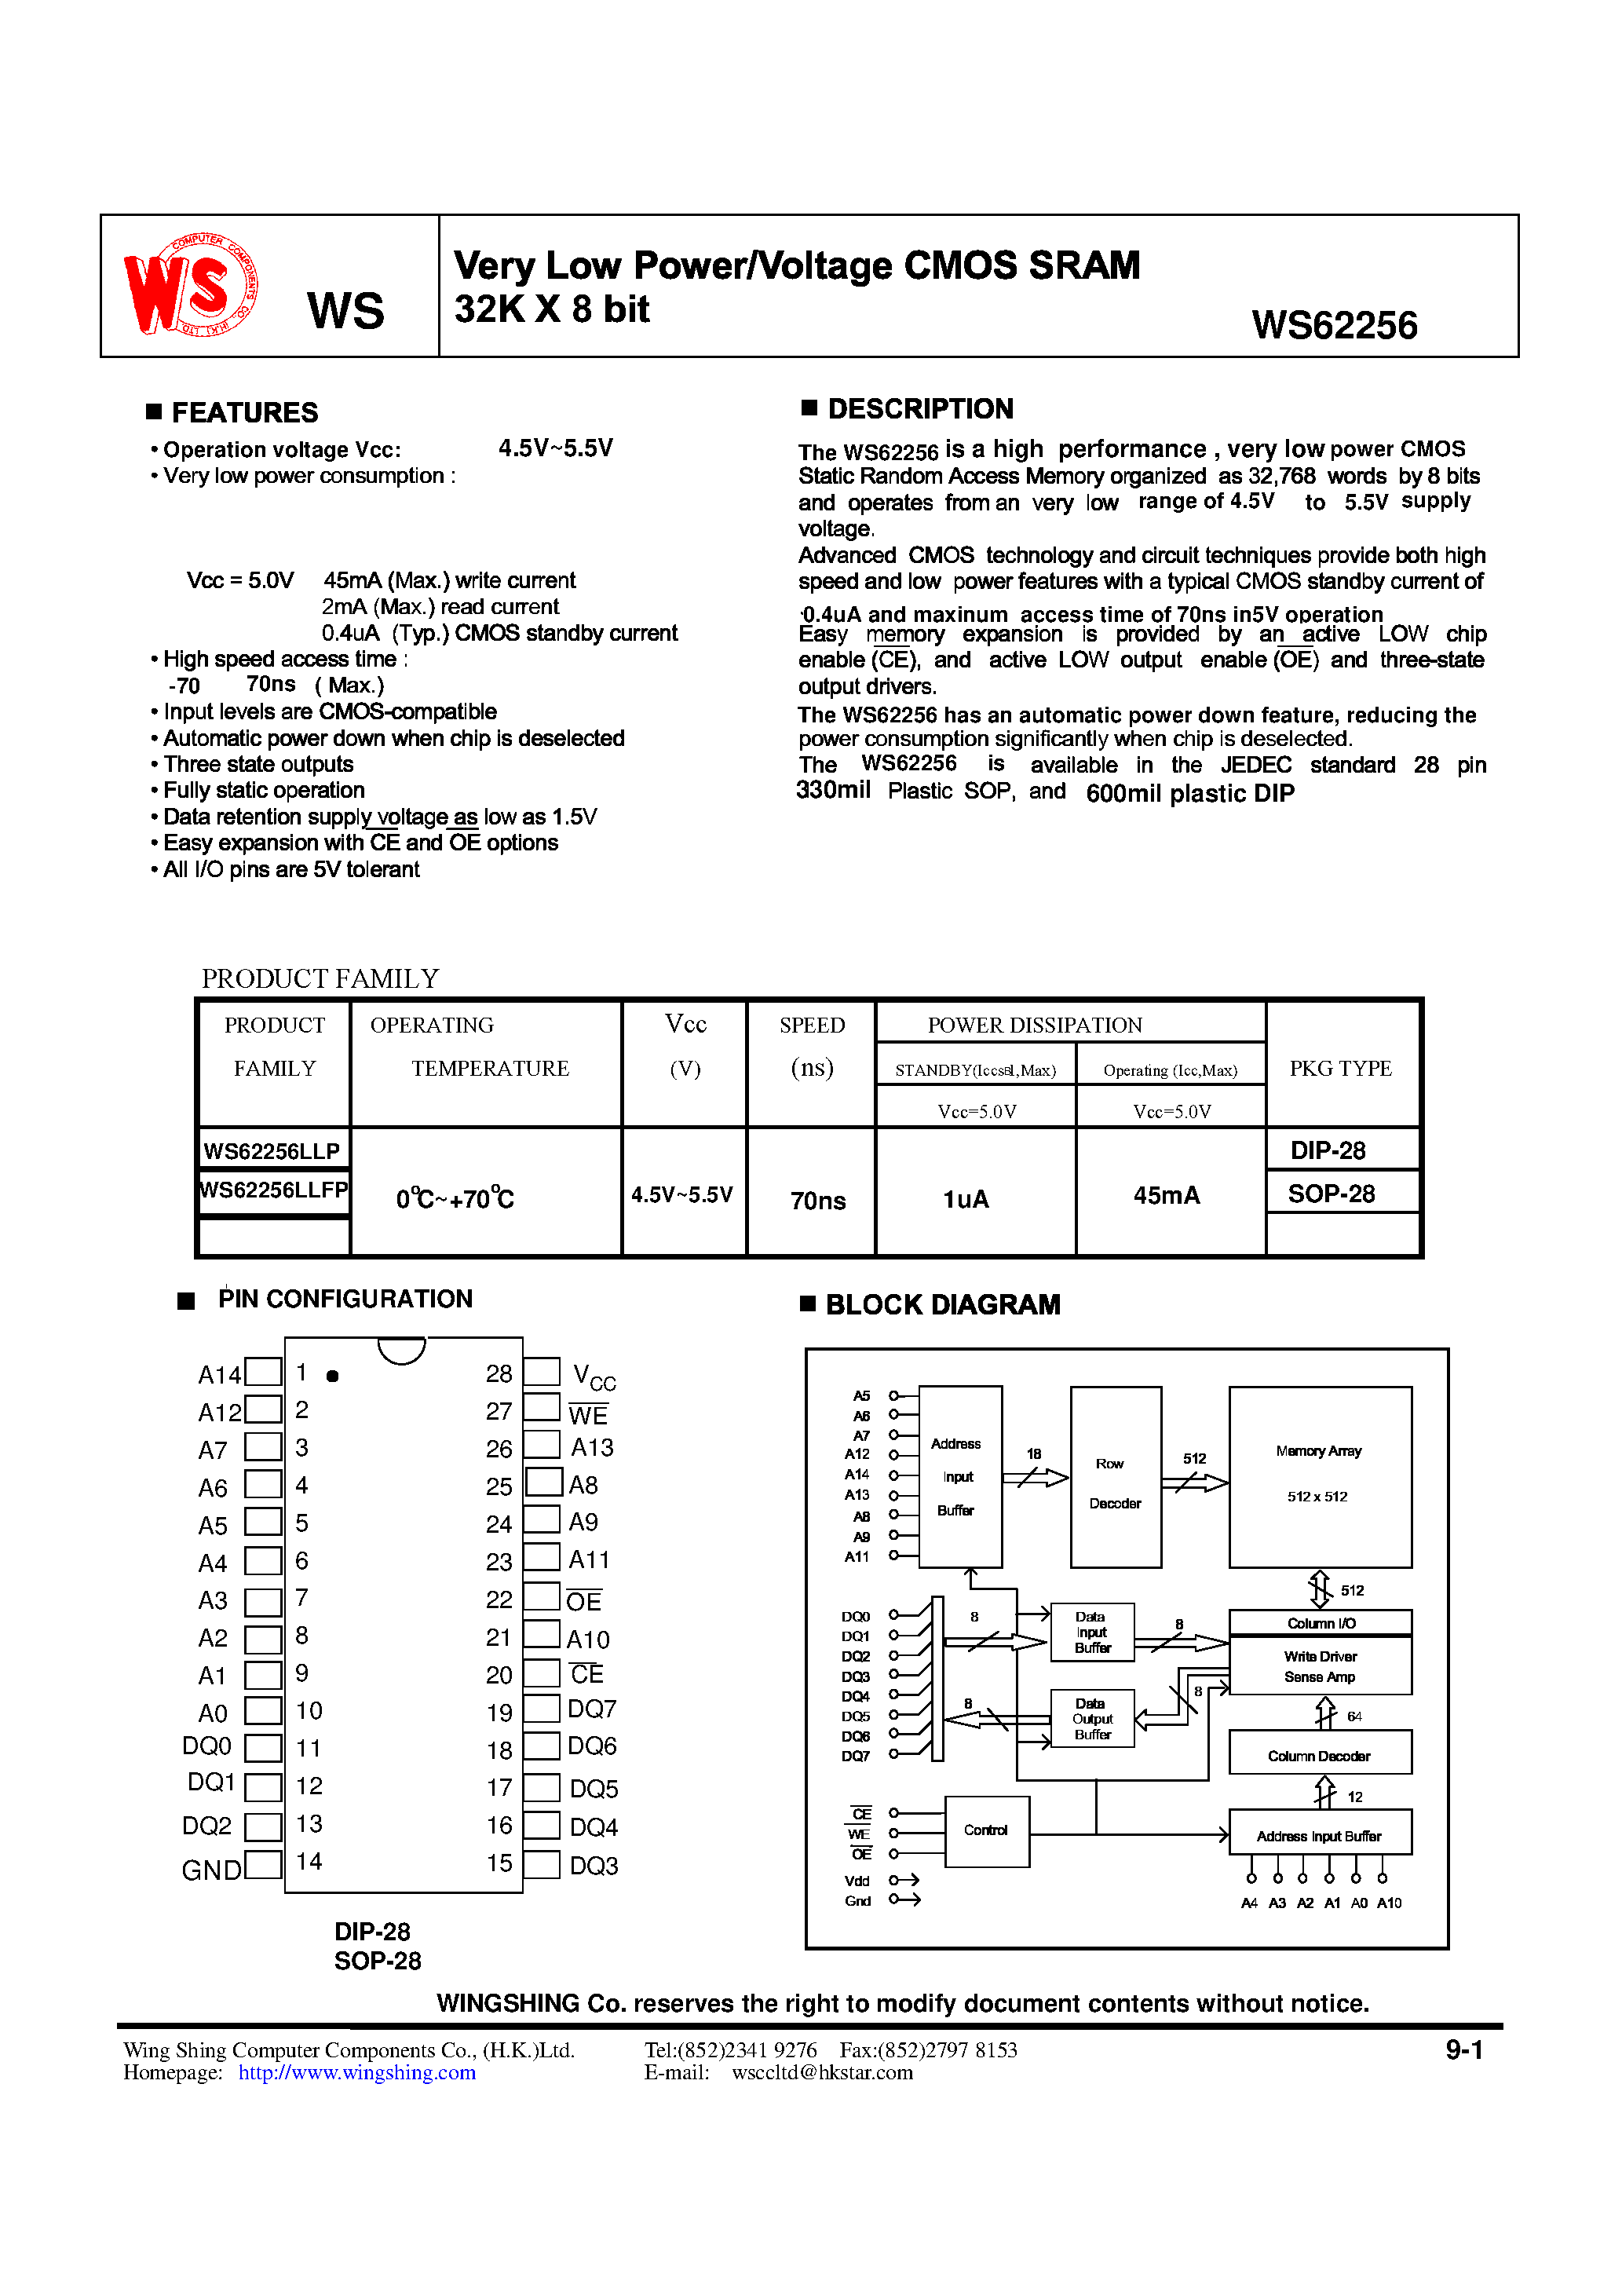 Datasheet WS62256 - Very Low Power / Voltage CMOS SRAM 32K X 8bit page 1